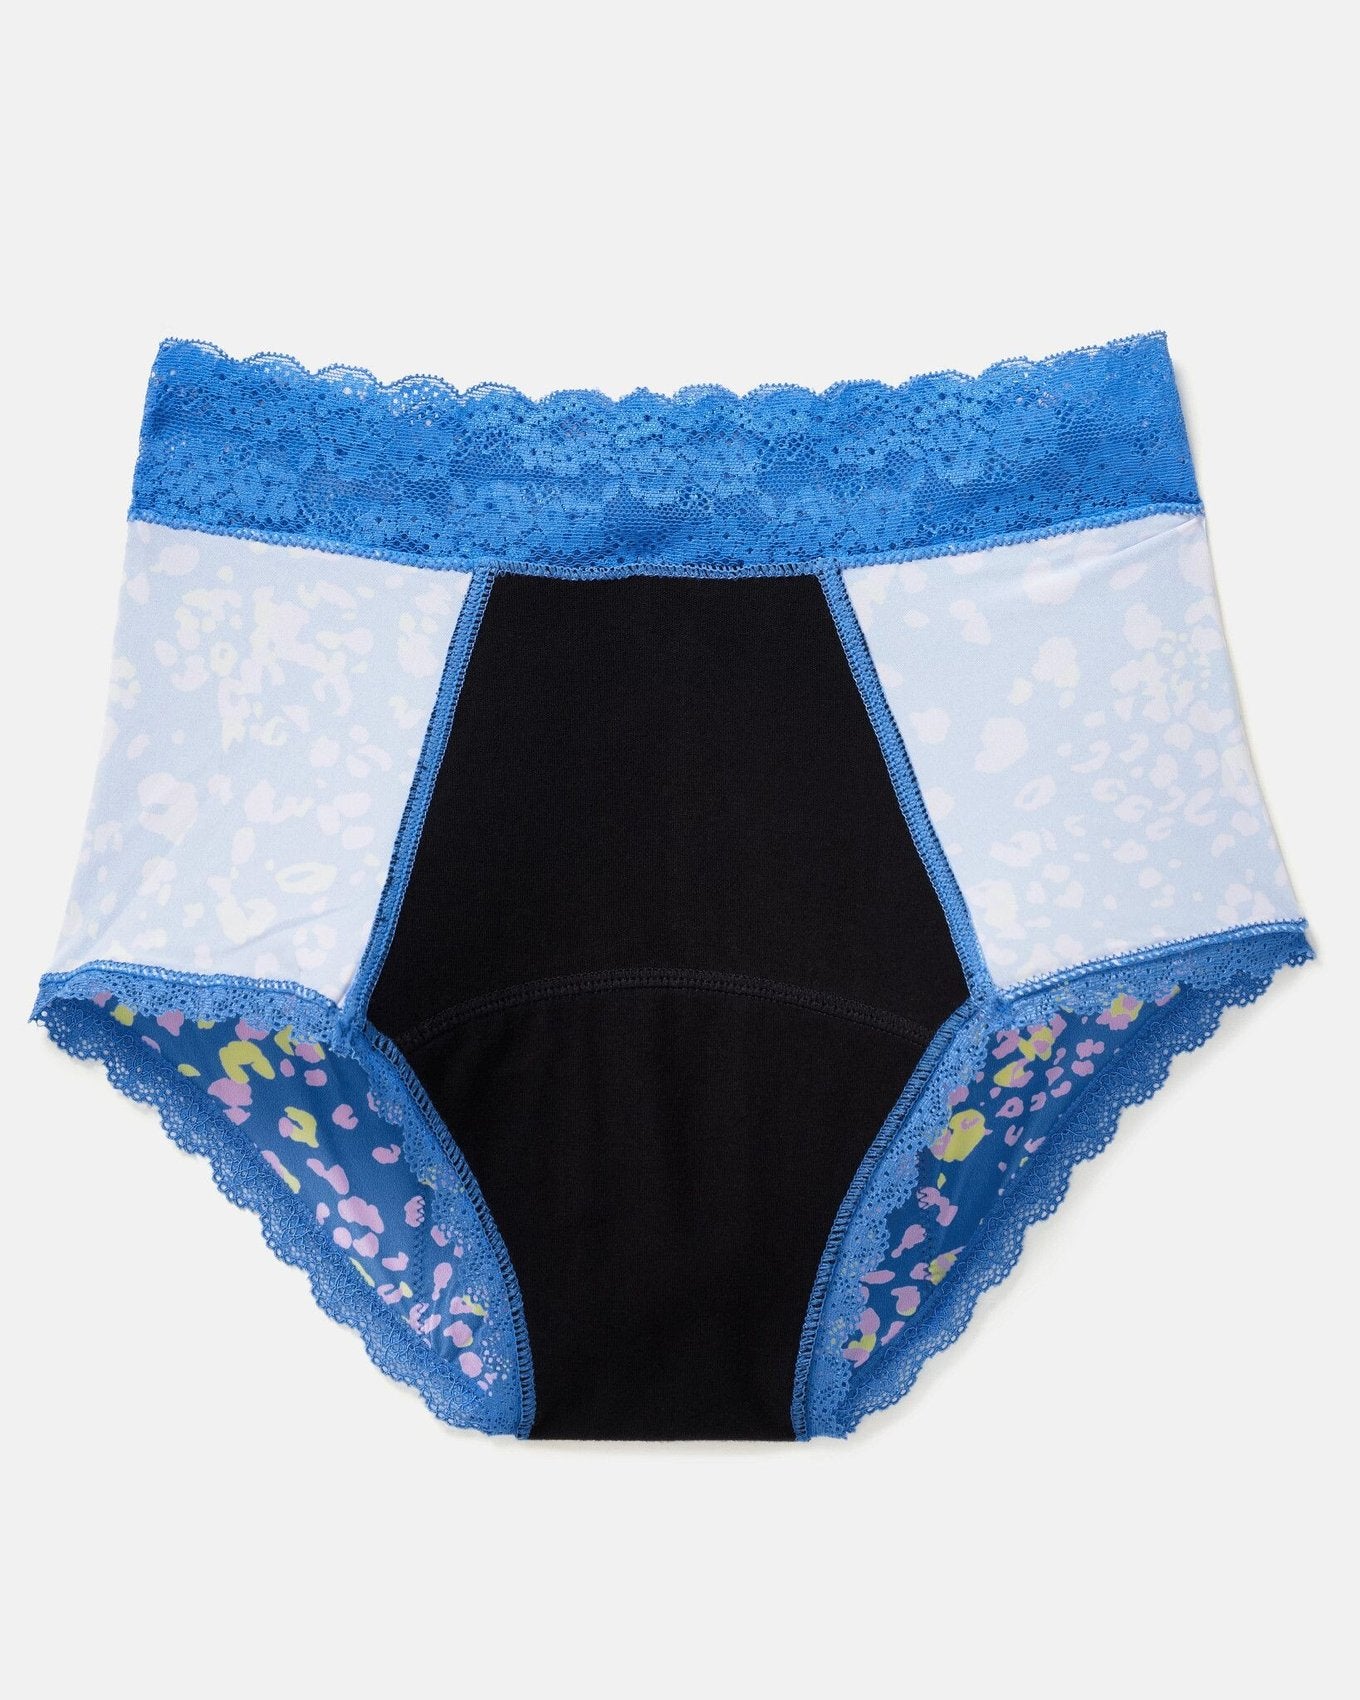 Amelia period-proof panty – Joyja